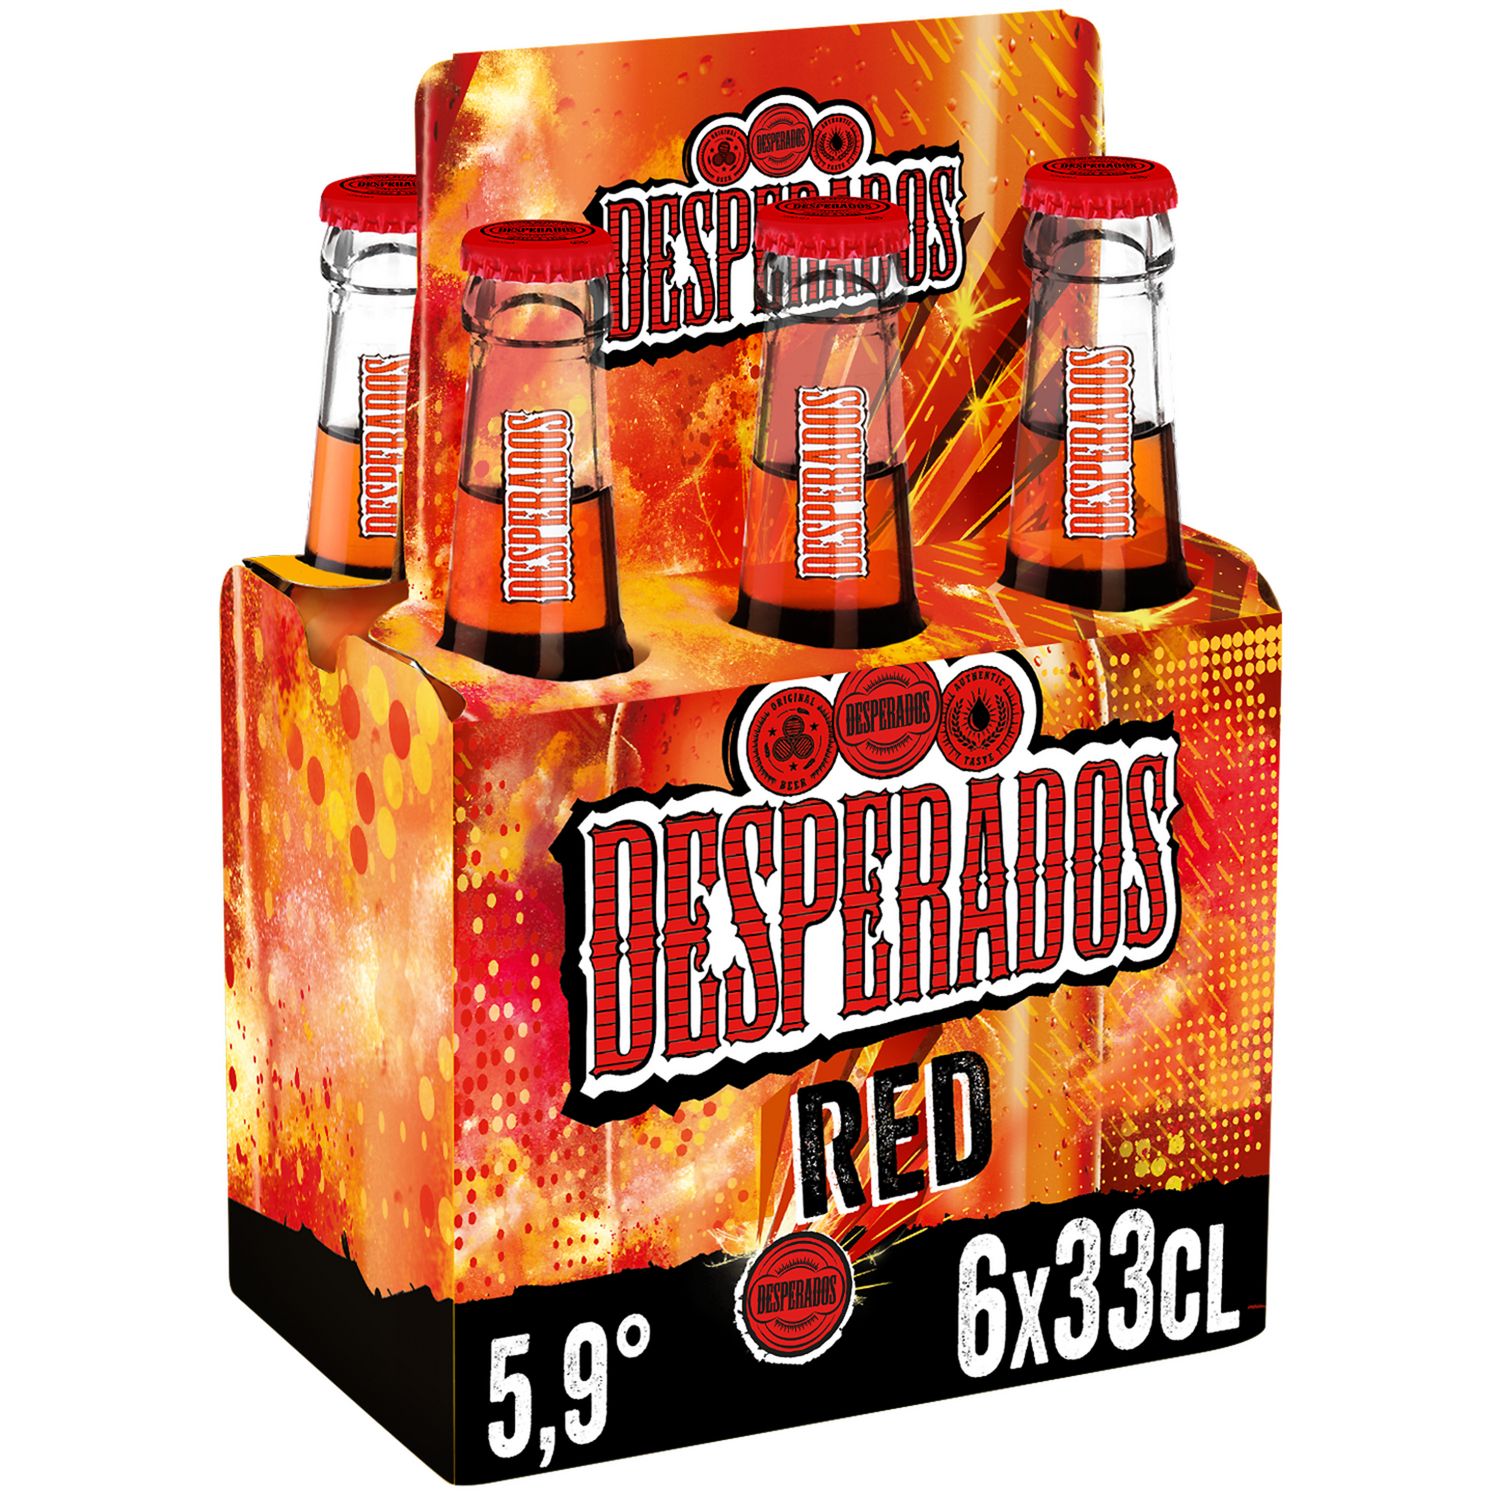 Bière Desperados : Desperados en bouteille